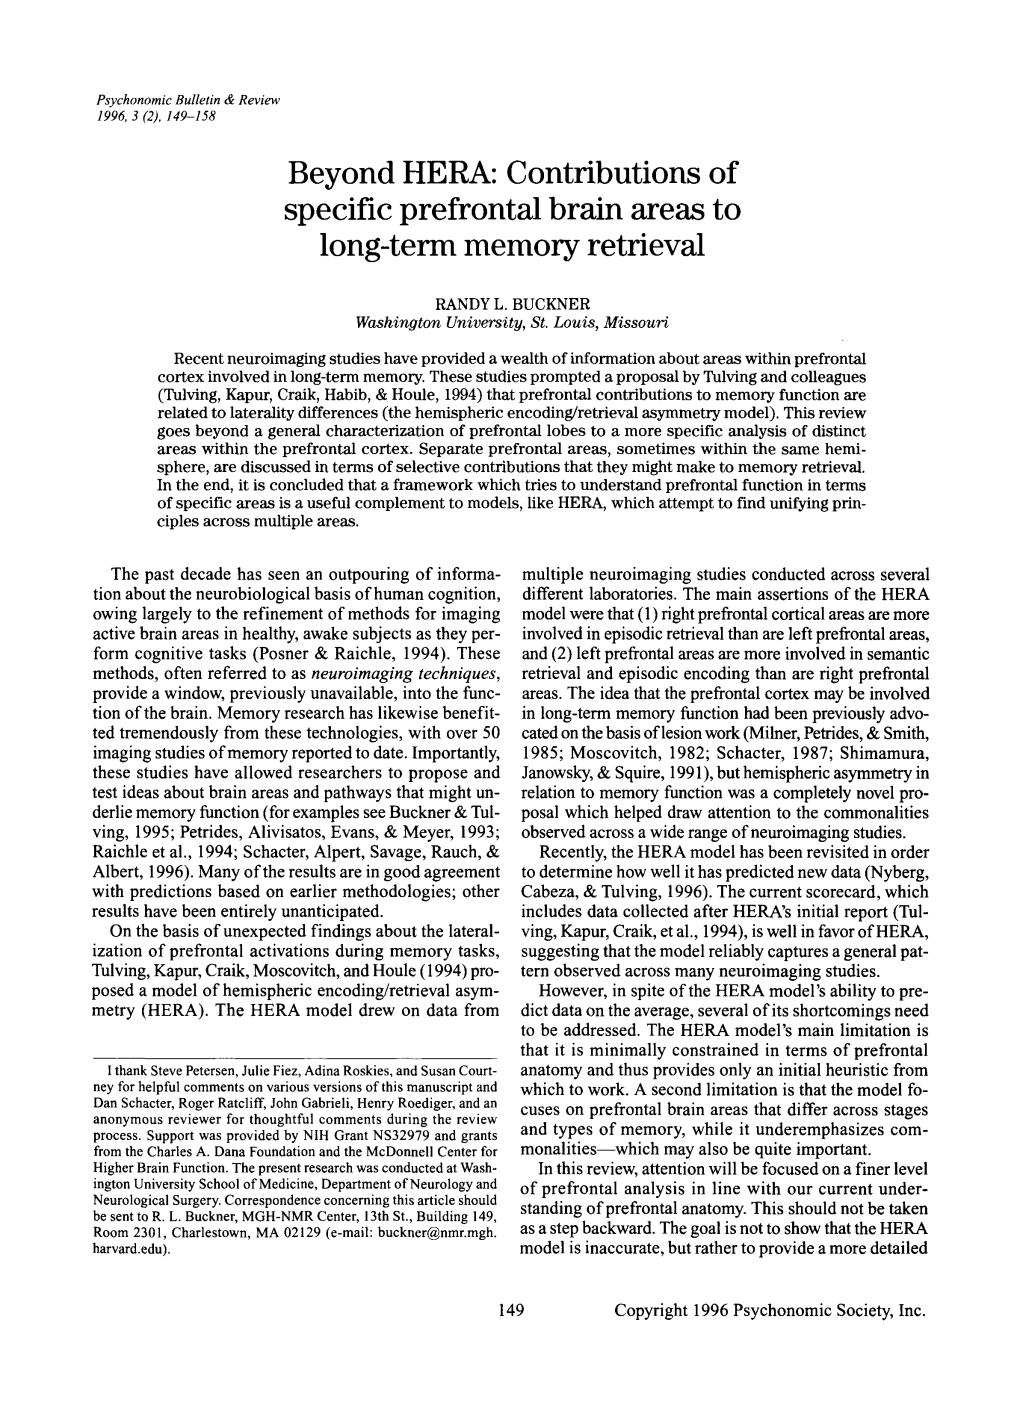 Beyond HERA: Contributions of Specific Prefrontal Brain Areas to Long-Term Memory Retrieval